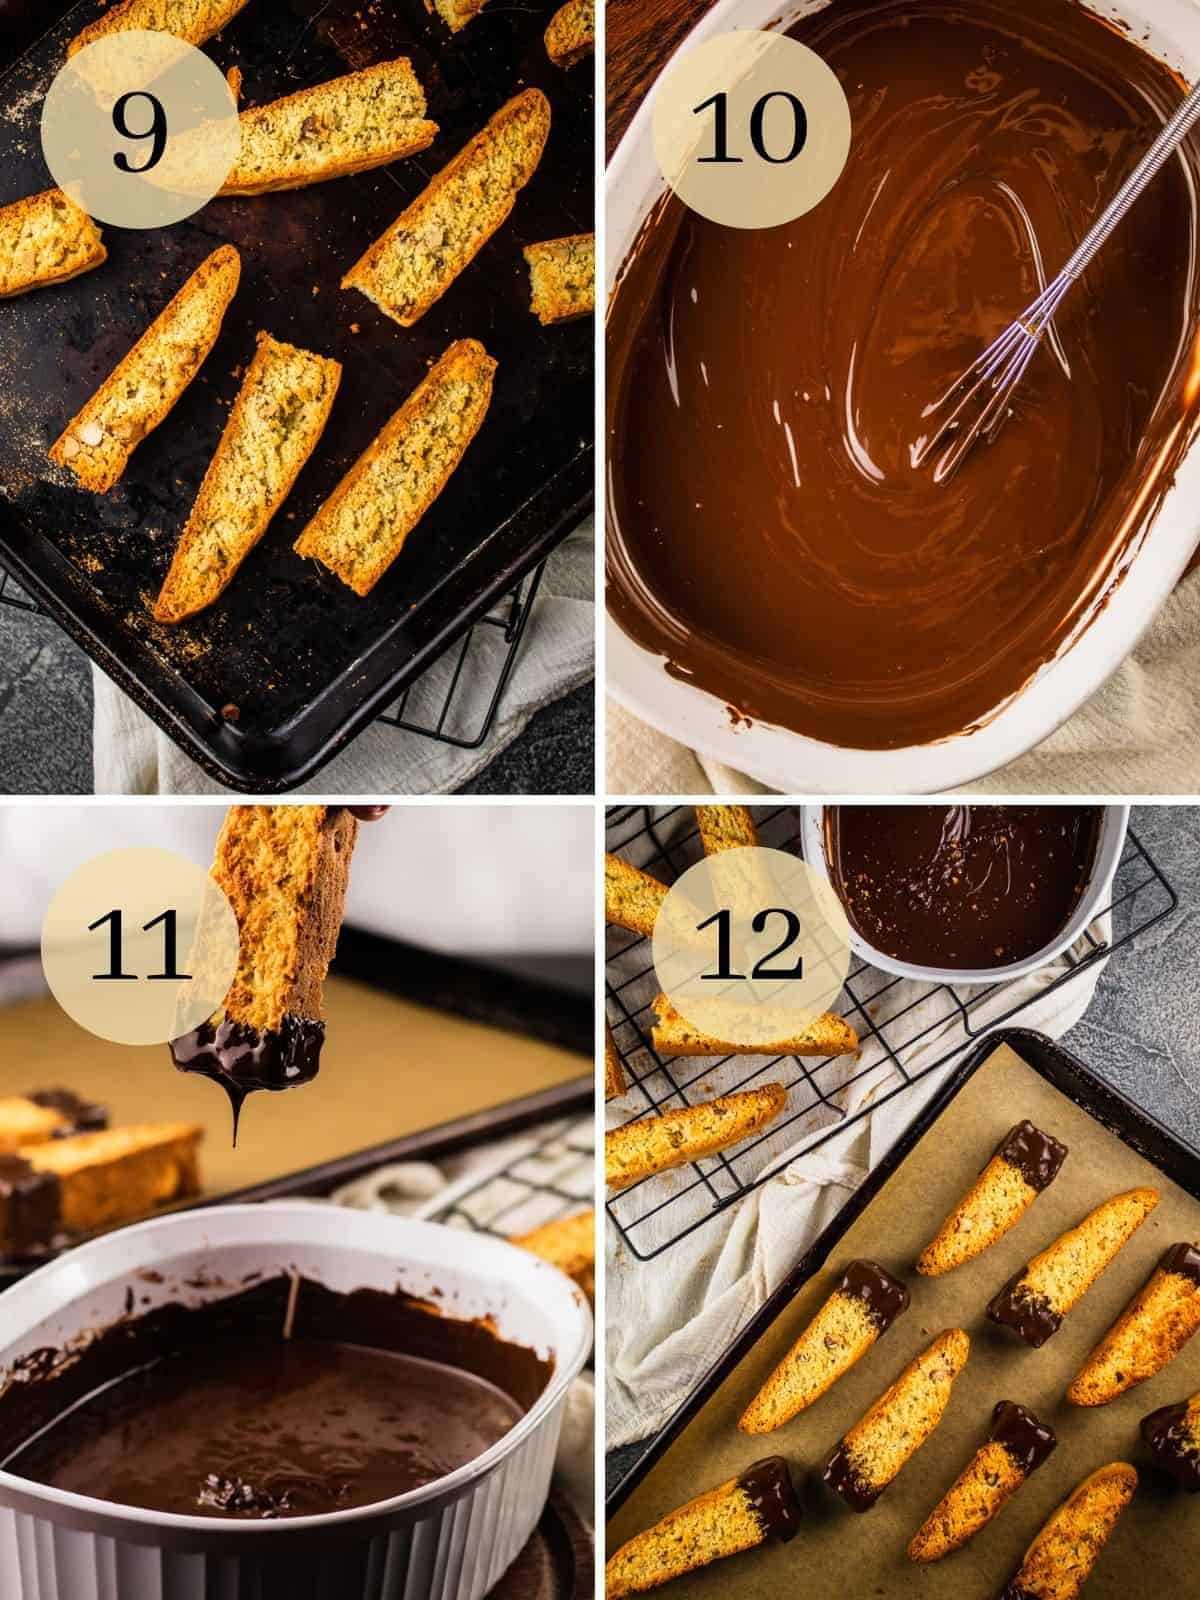 biscotti on sheet pan, melted chocolate, dipping biscotti in chocolate and biscotti drying on sheet pan